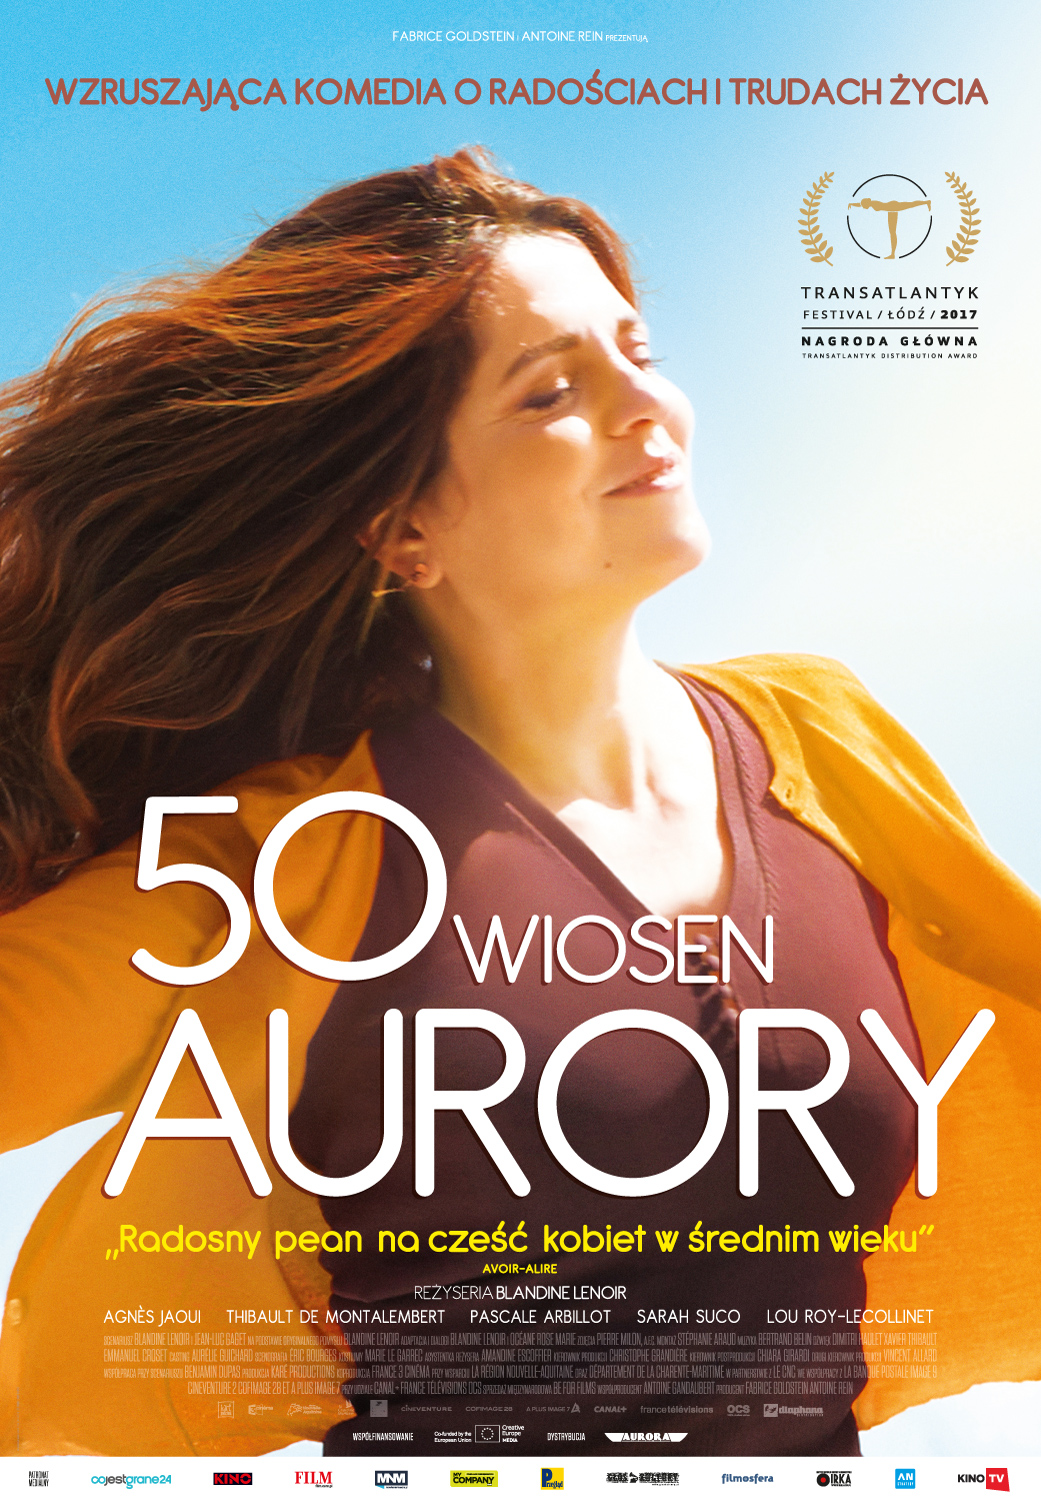 50 wiosen Aurory / KOMEDIE Z AMONDO